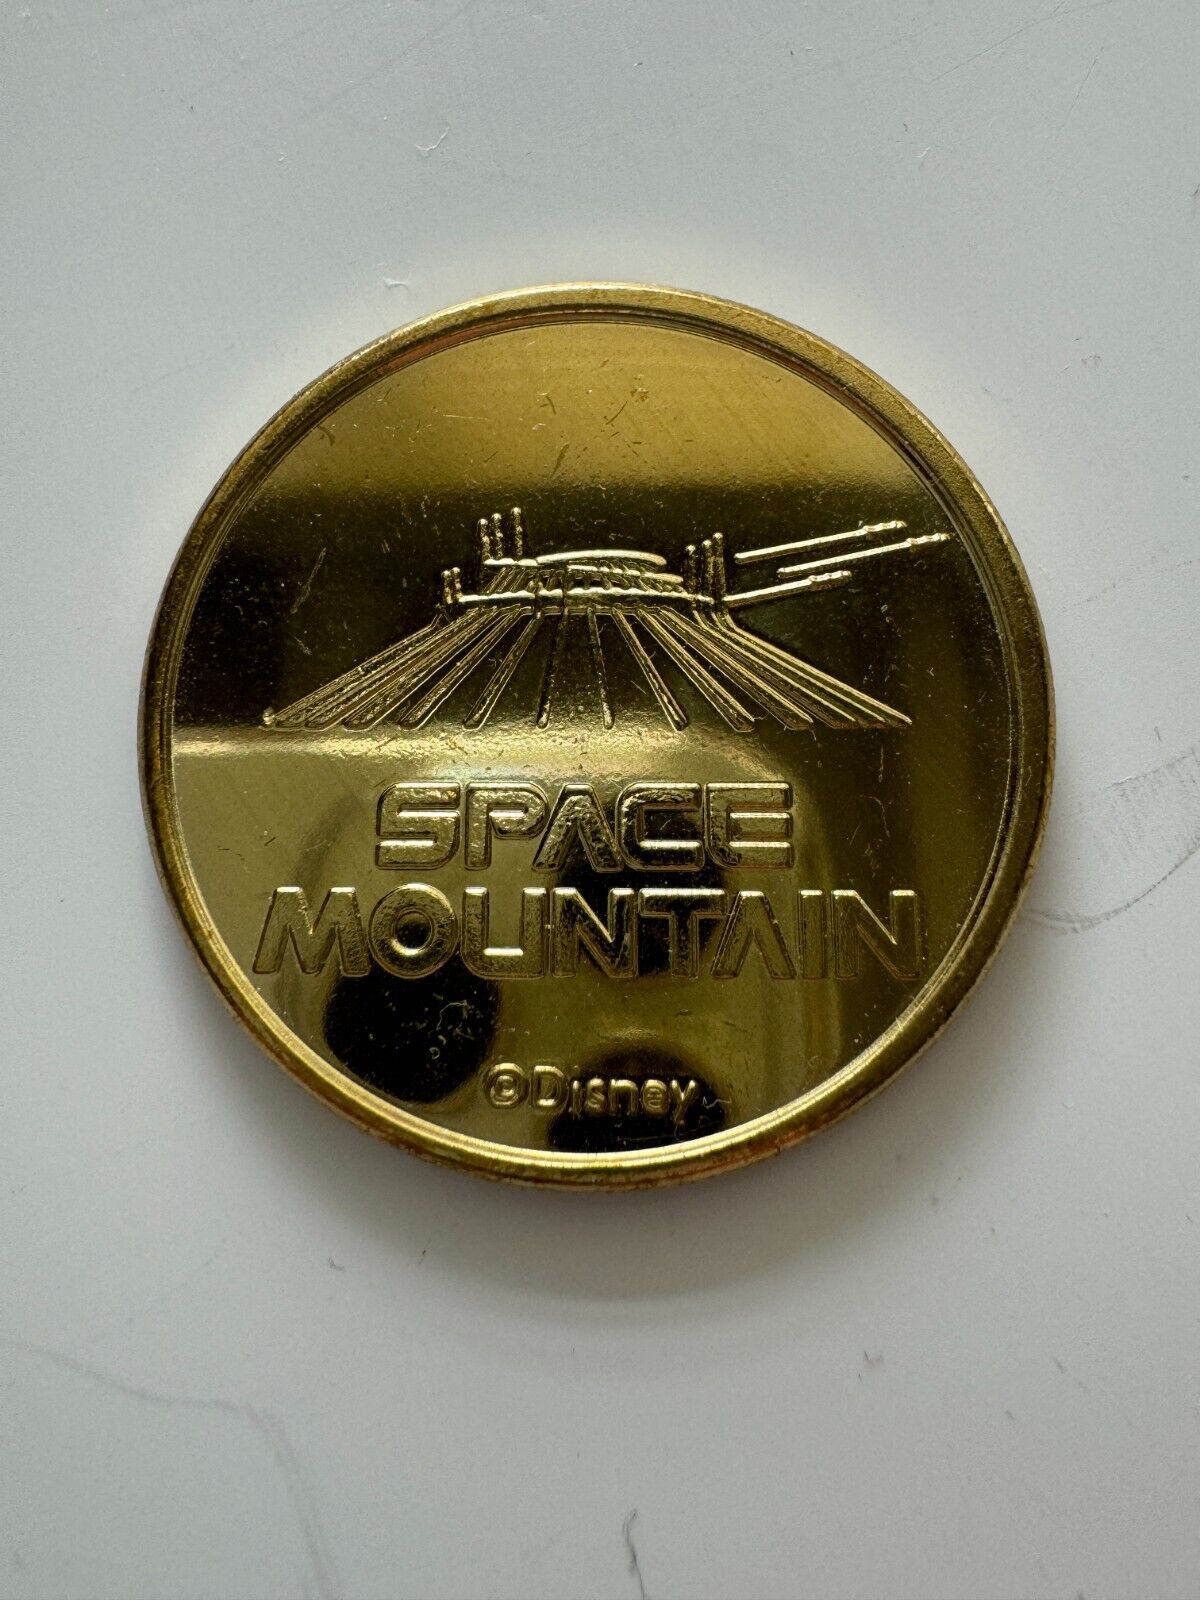 Disneyland Tomorrowland: SPACE  MOUNTAIN gold medallion coin collectible